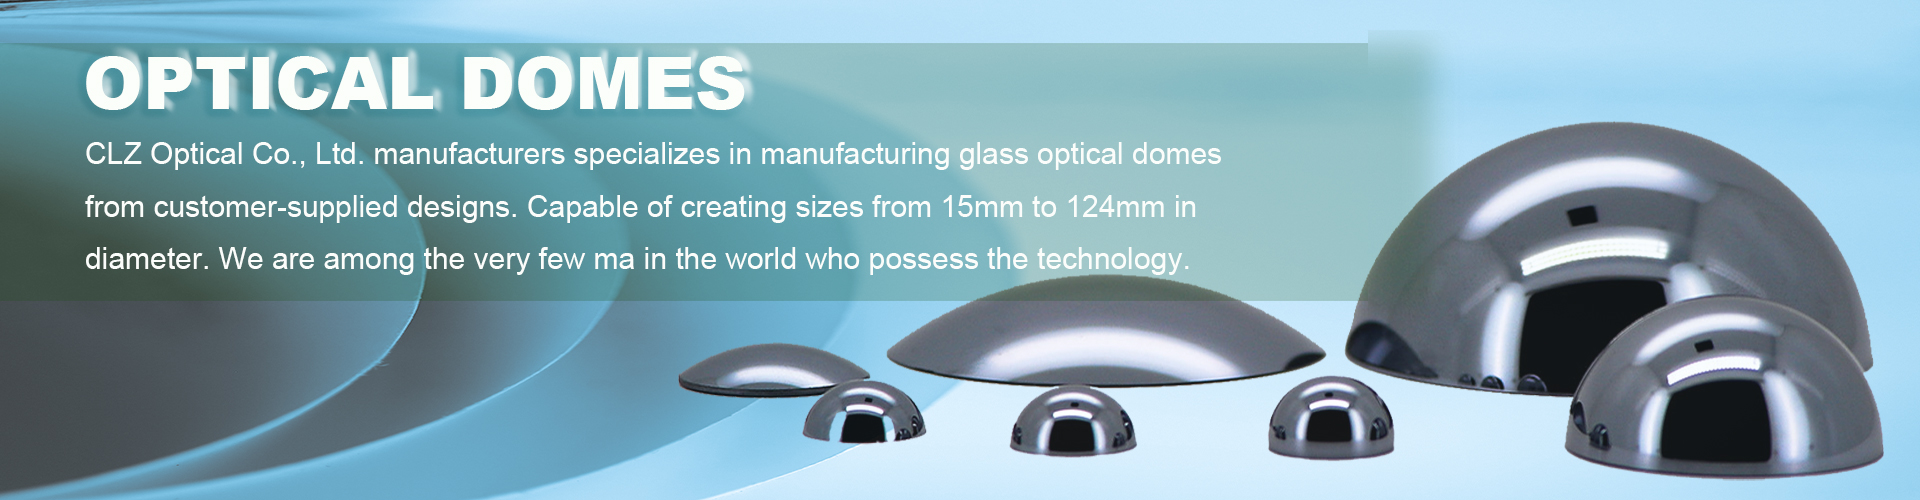 Optical Domes